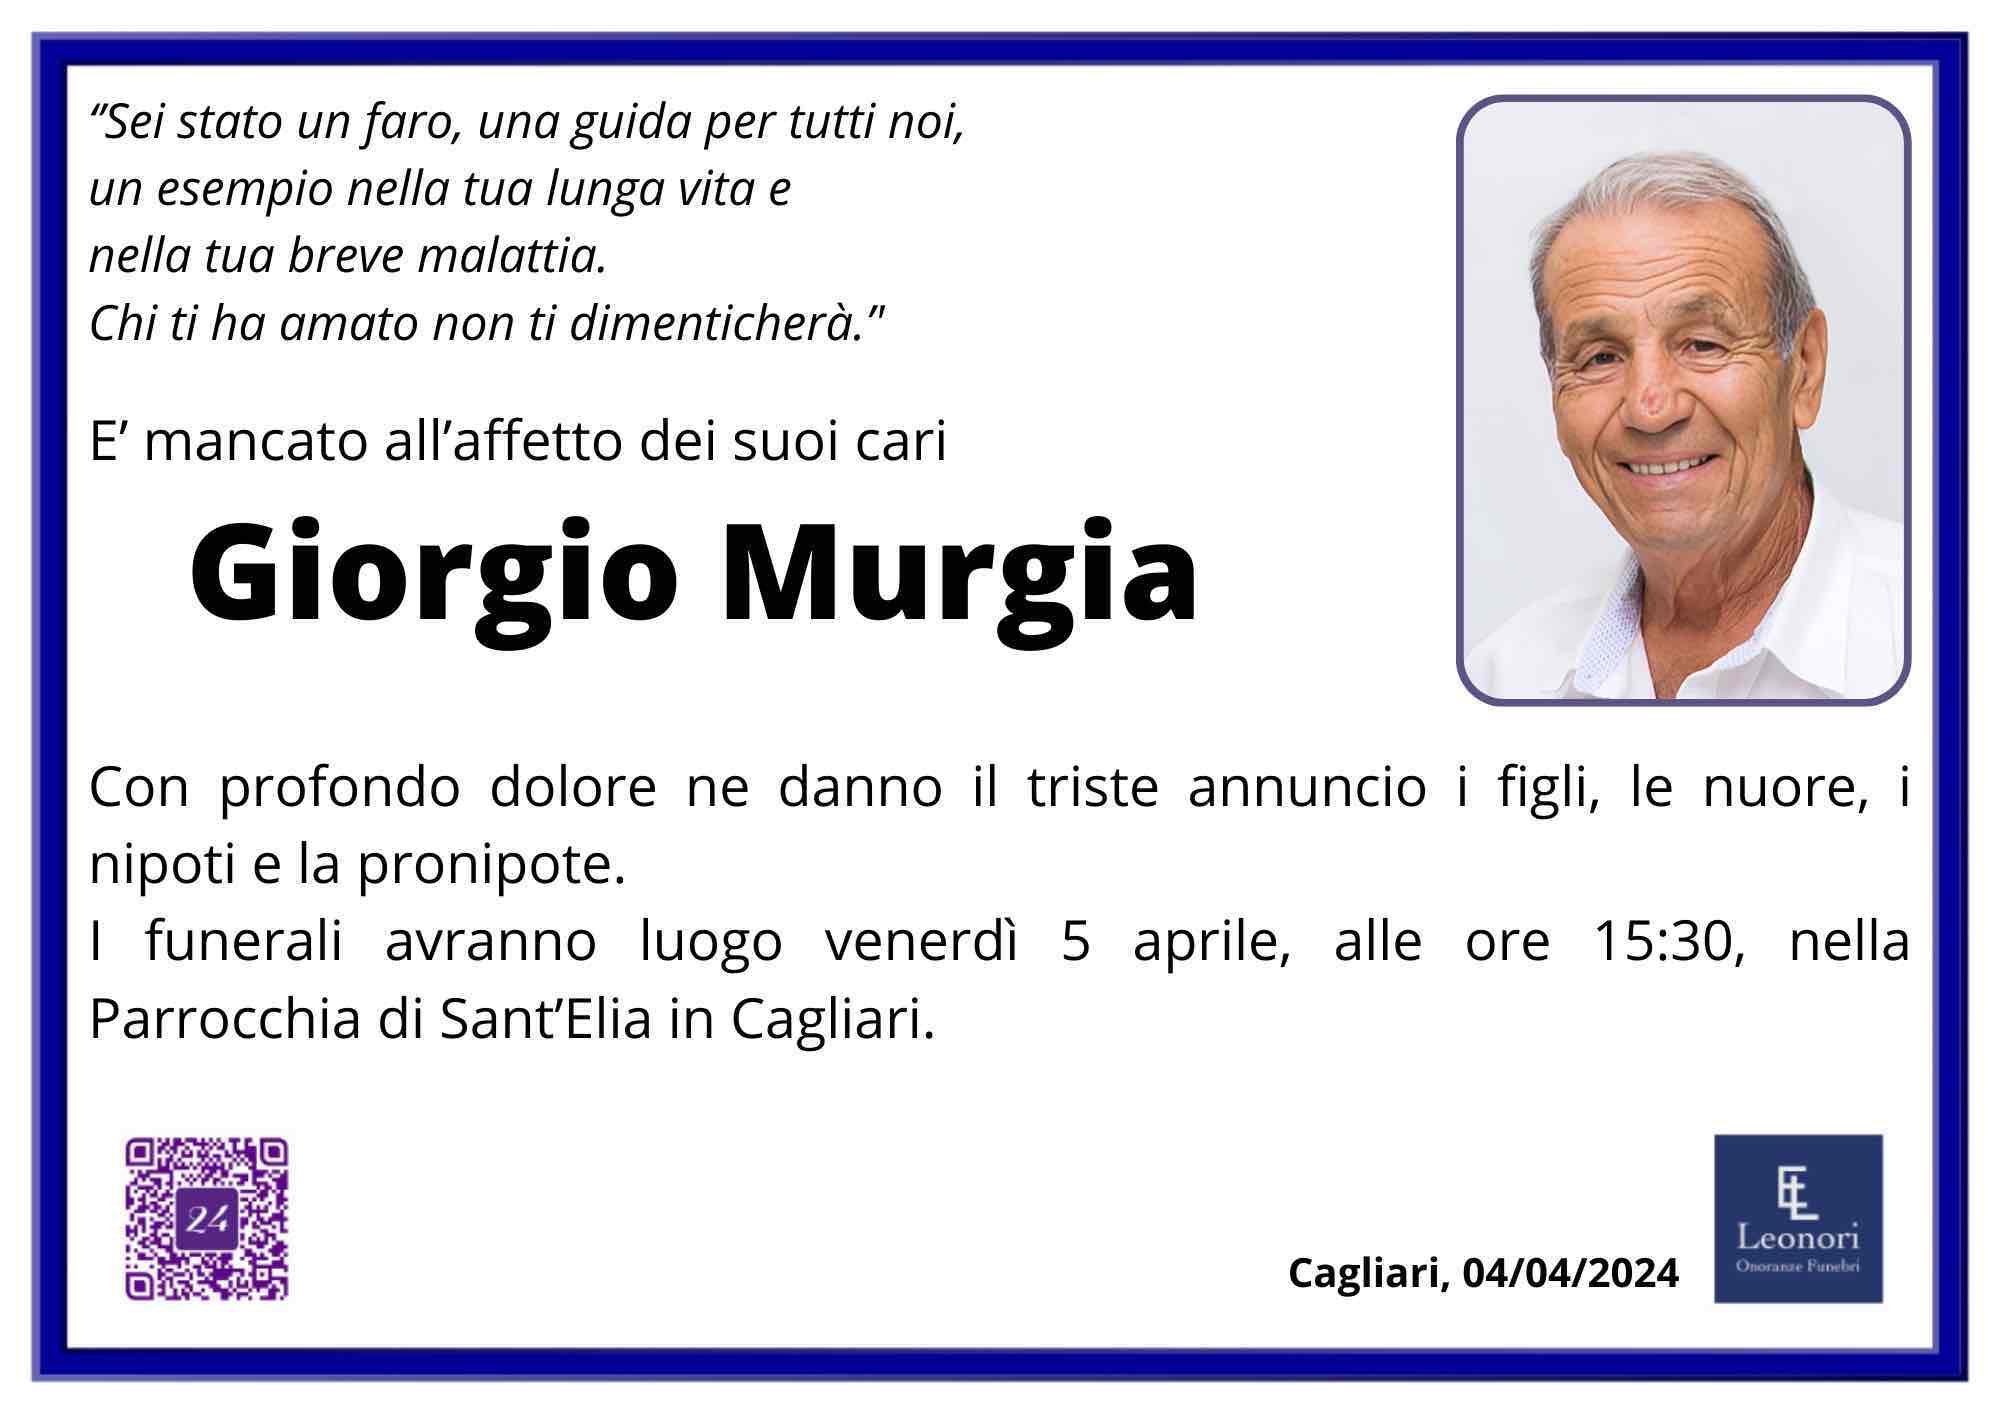 Giorgio Murgia